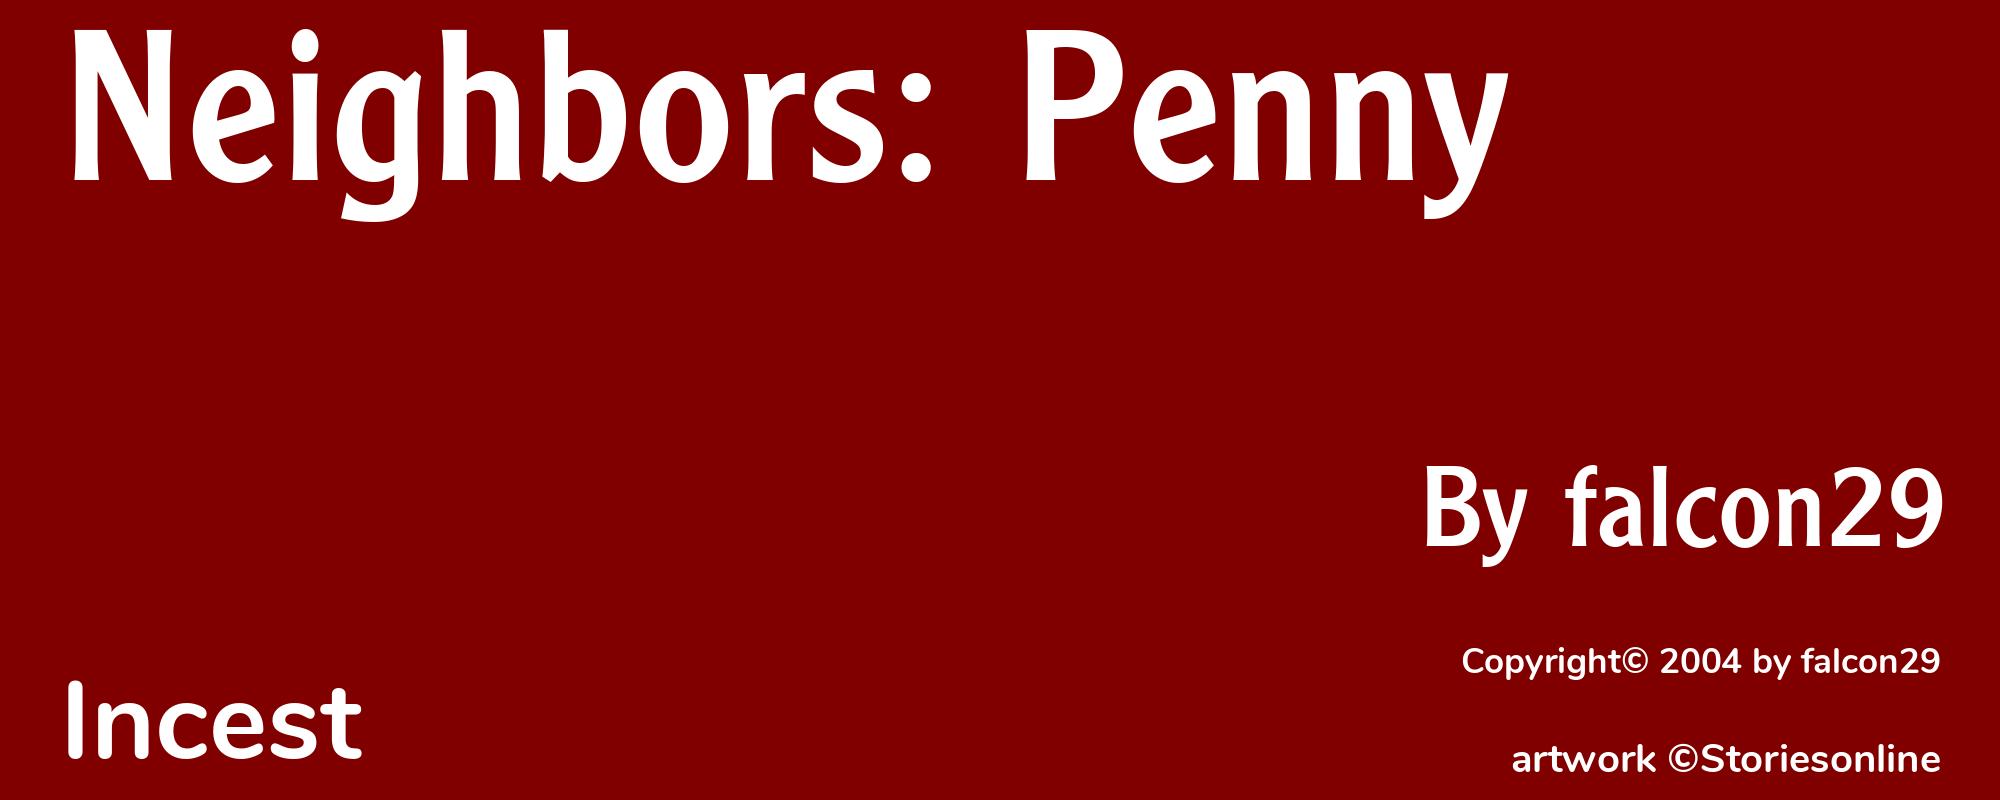 Neighbors: Penny - Cover